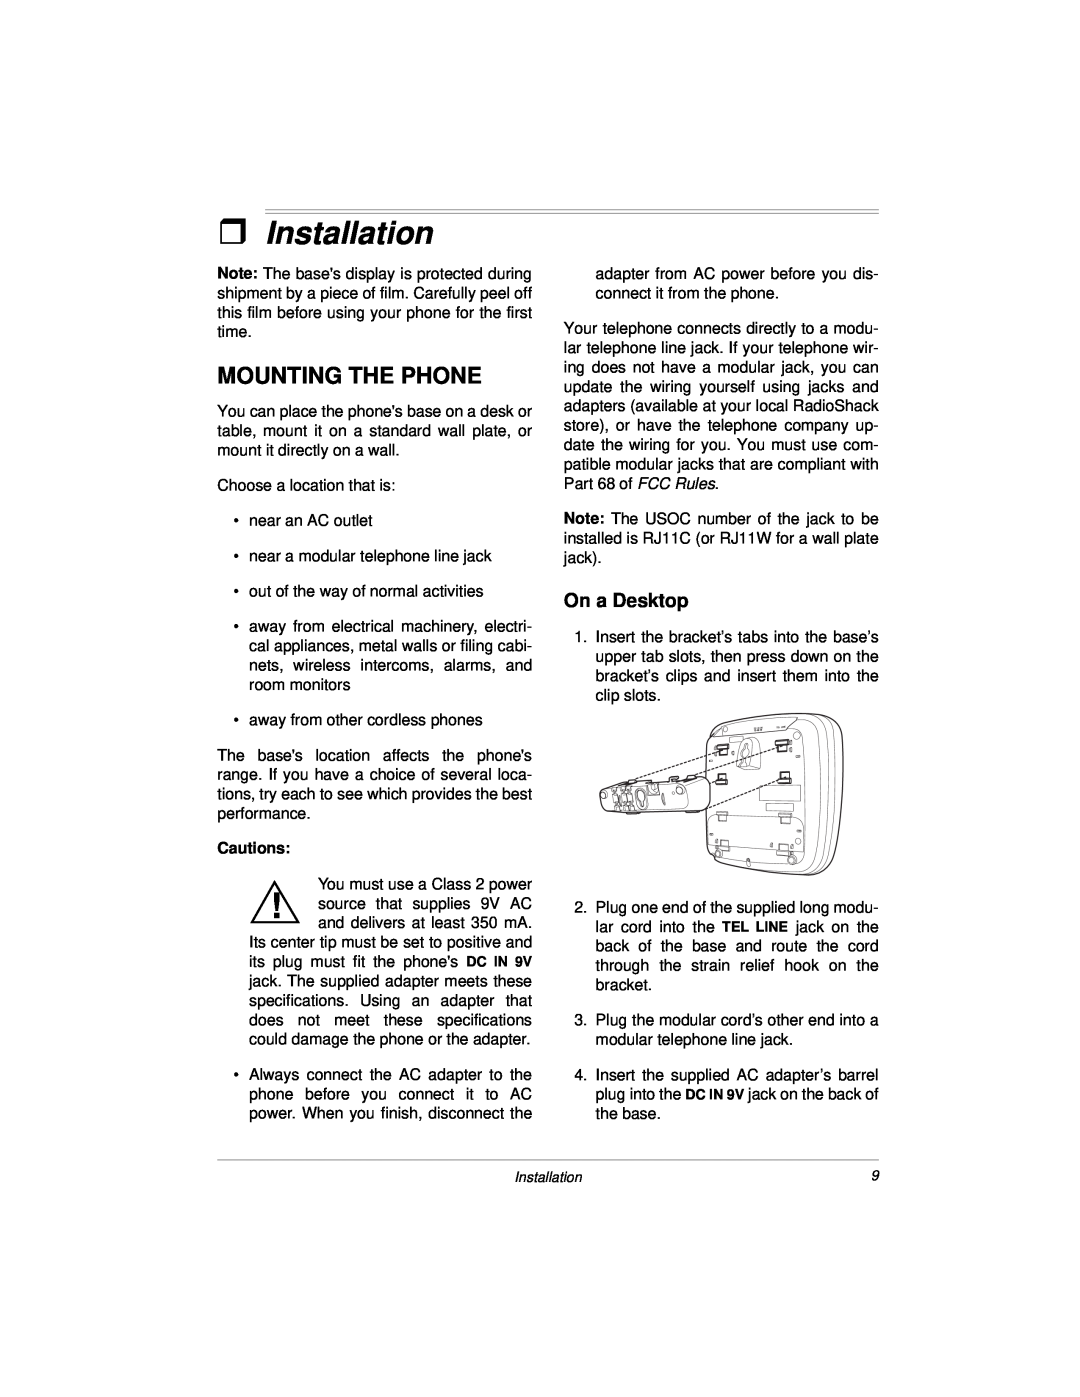 Radio Shack and Speakerphone, Dual Keypad owner manual ˆ Installation, Mounting The Phone, On a Desktop 